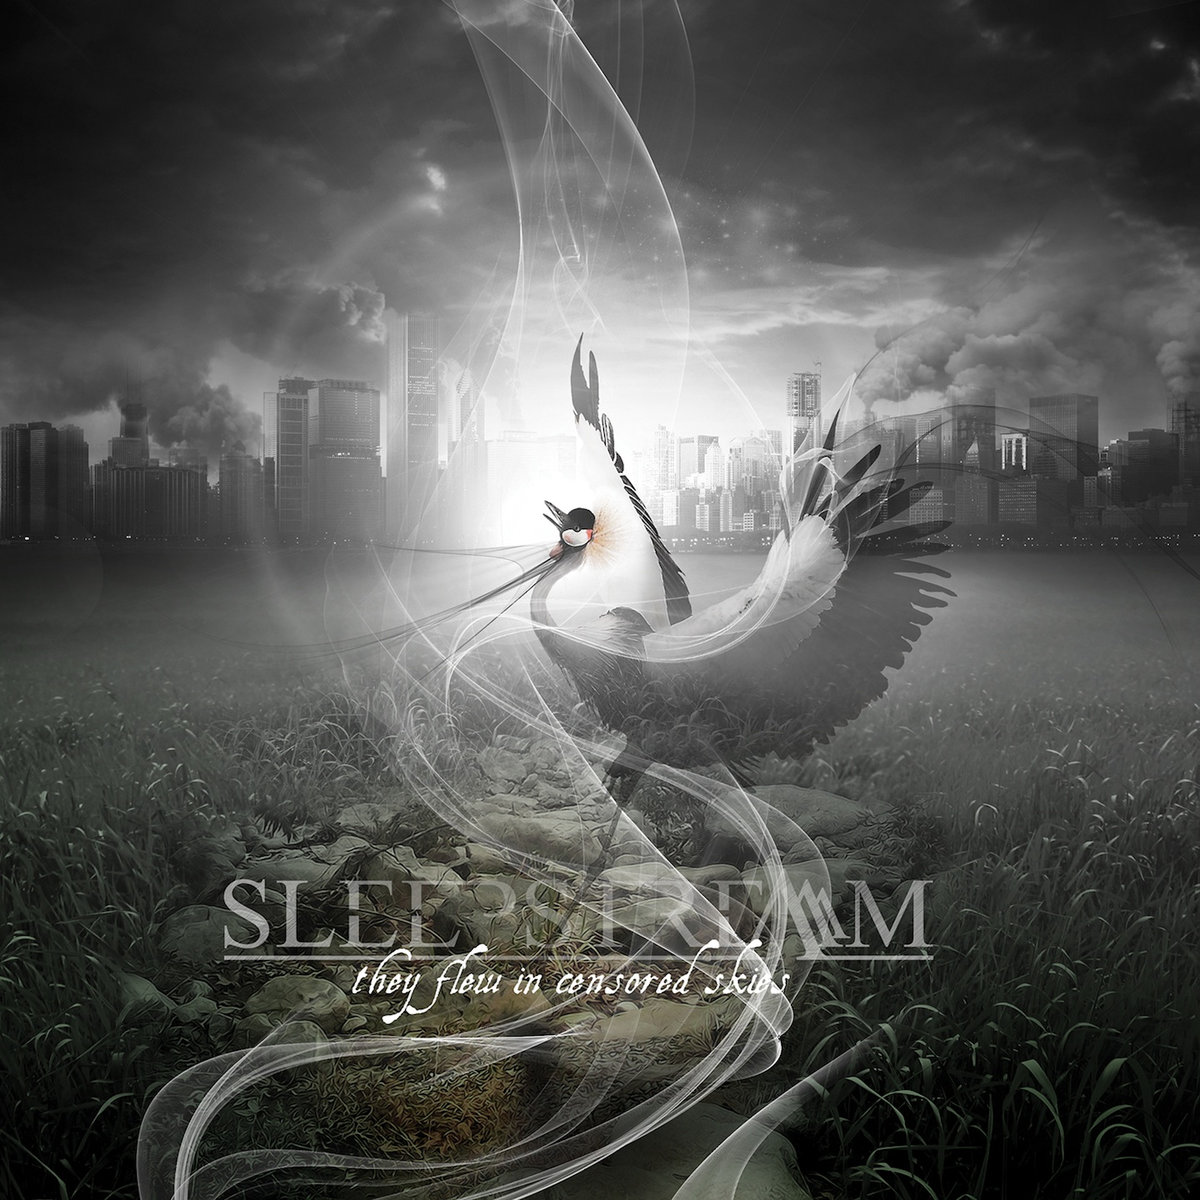 Sleepstream – They Flew In Censored Skies